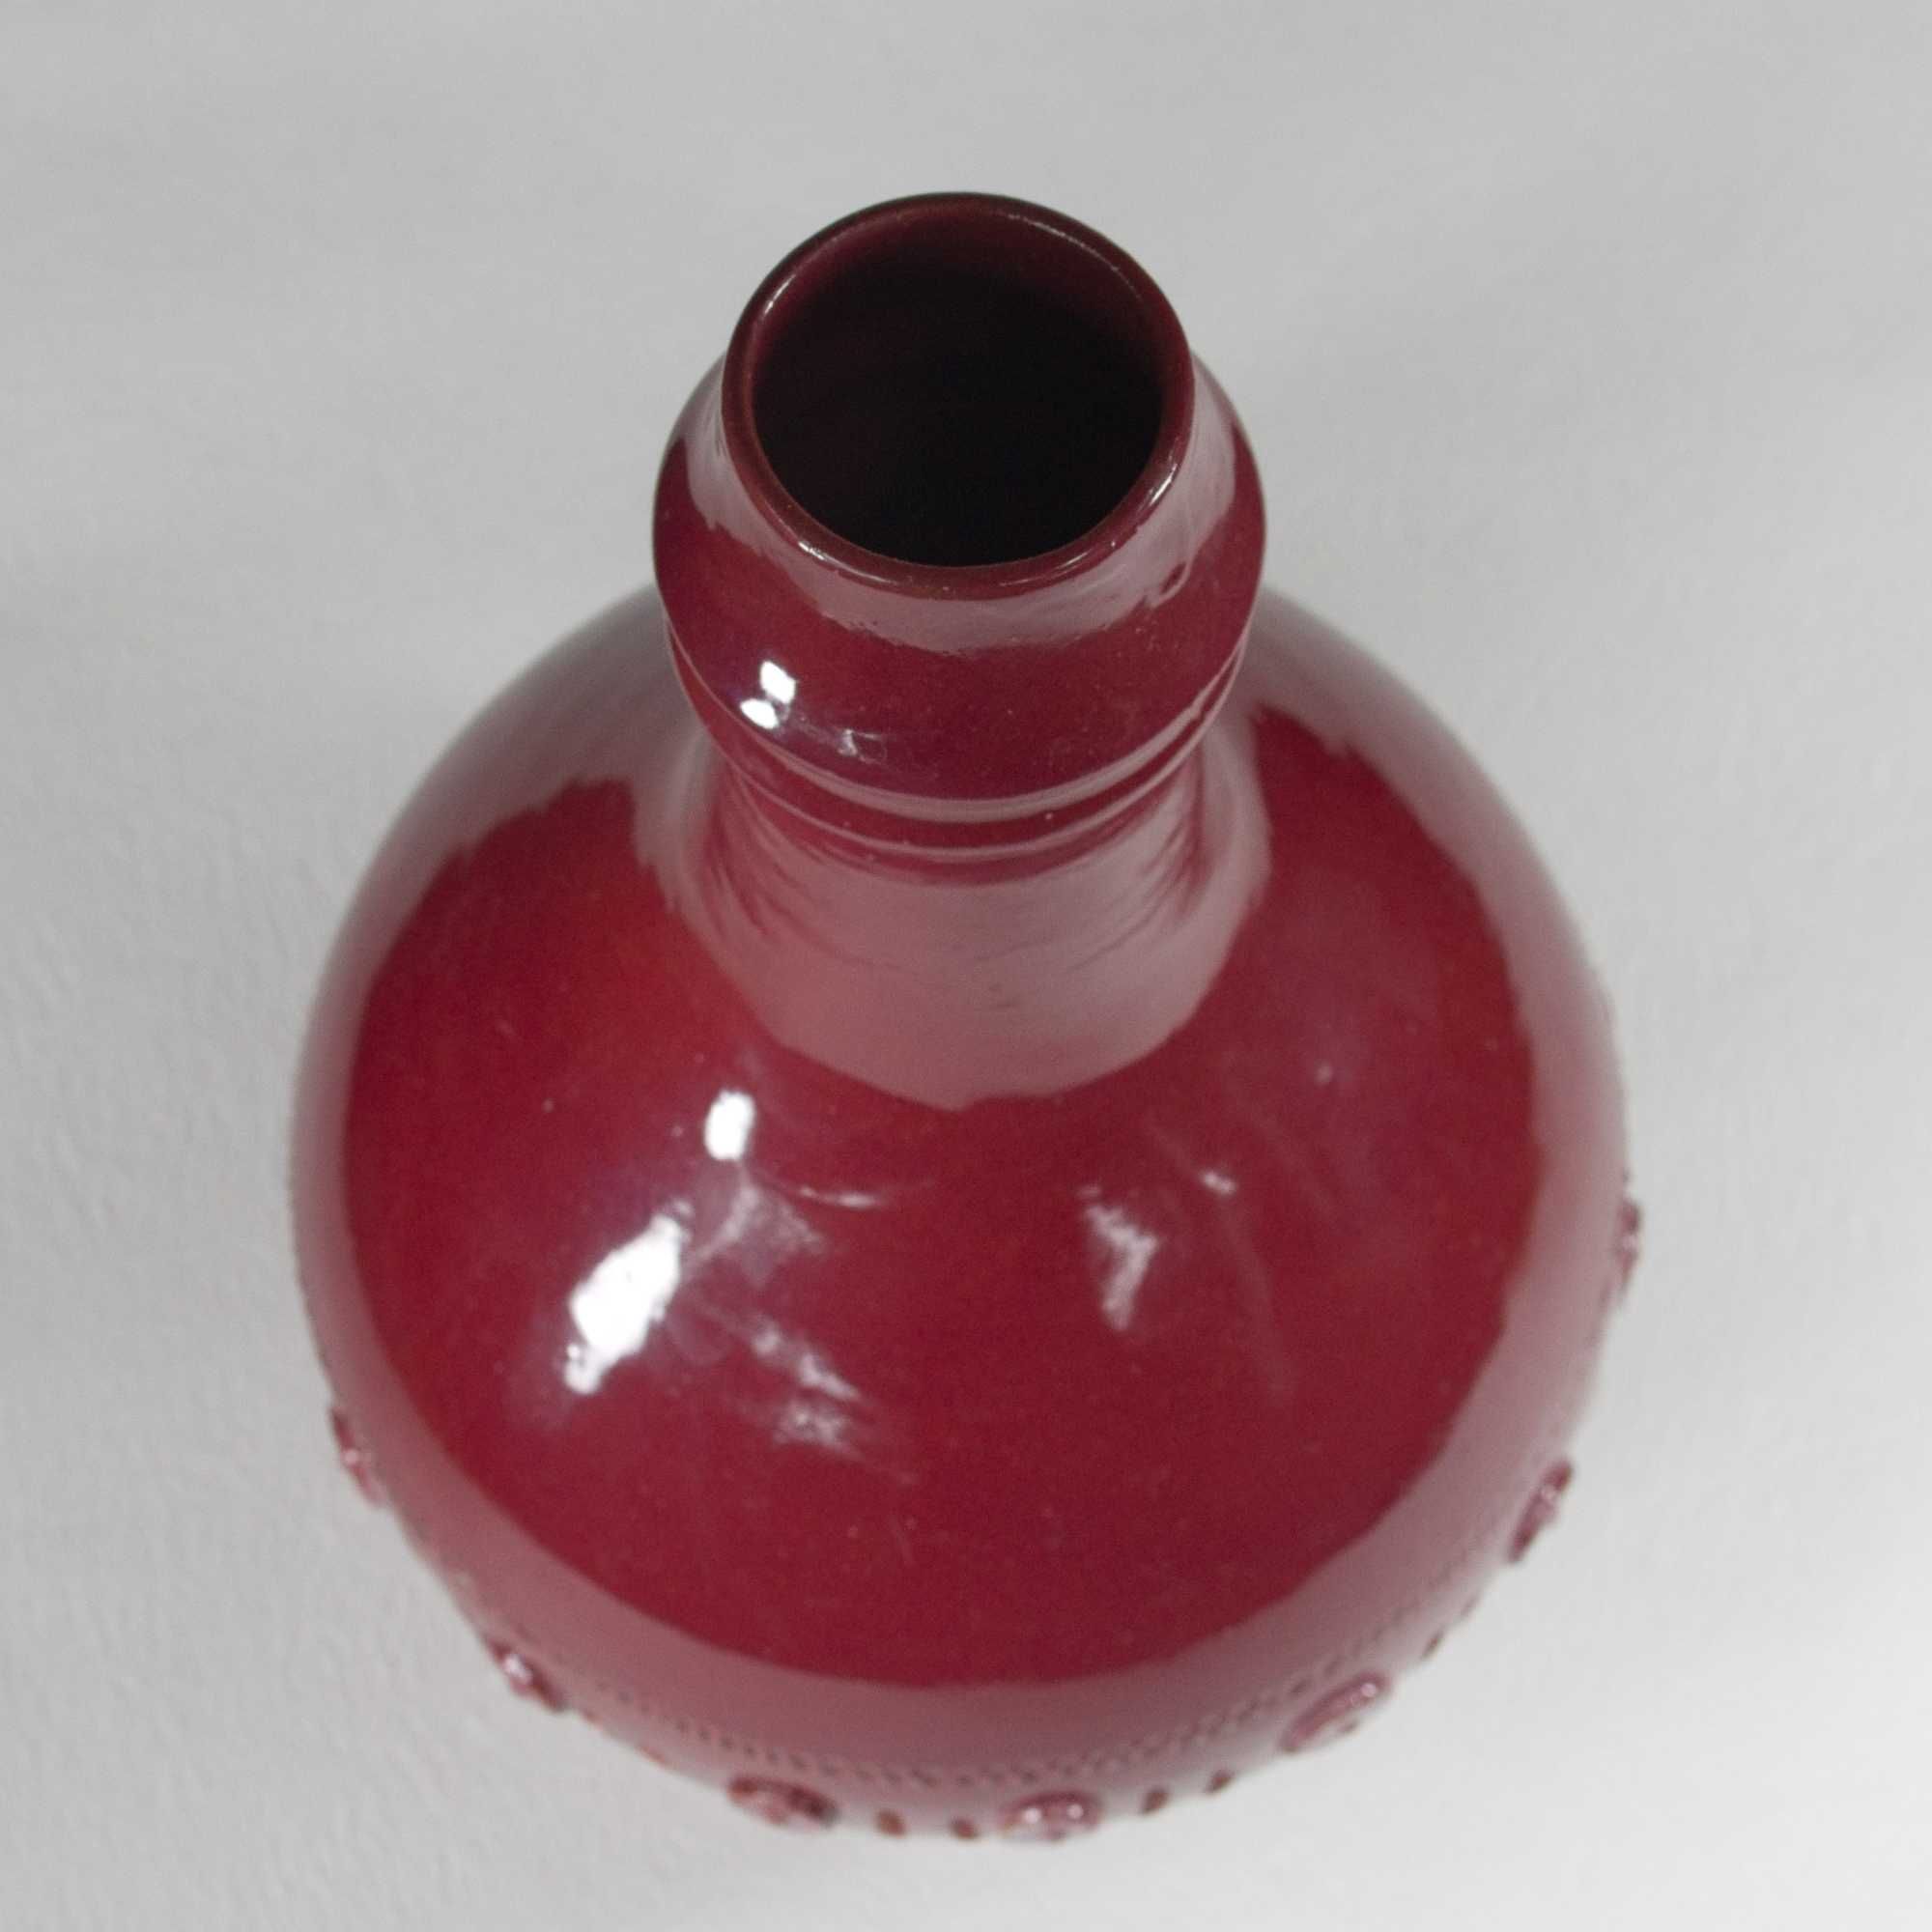 Vaza din ceramica vintage deosebita, tip sang-de-boeuf, unicat.